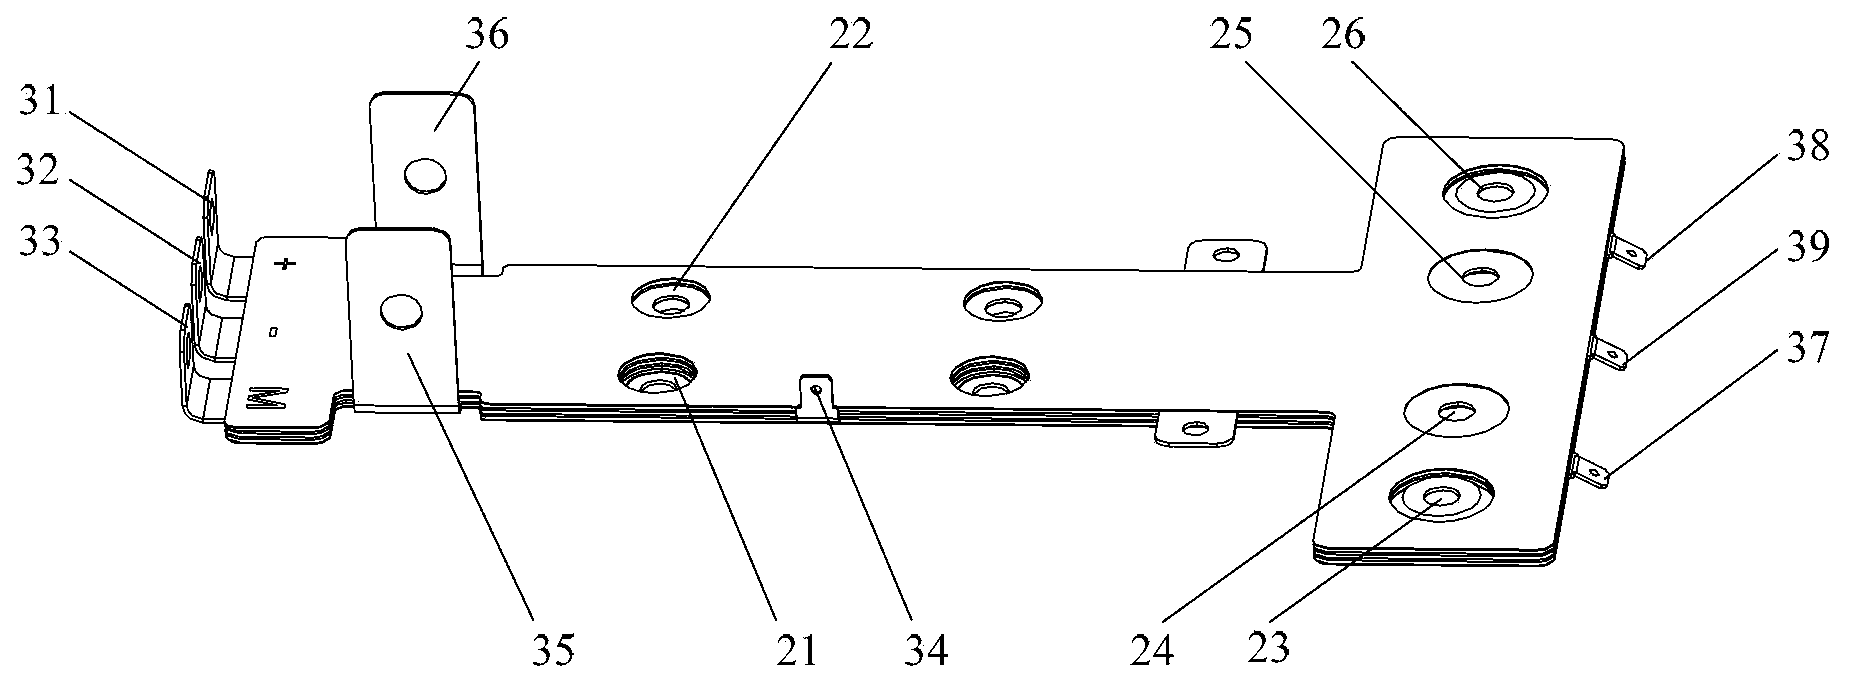 Single-phase inverter circuit